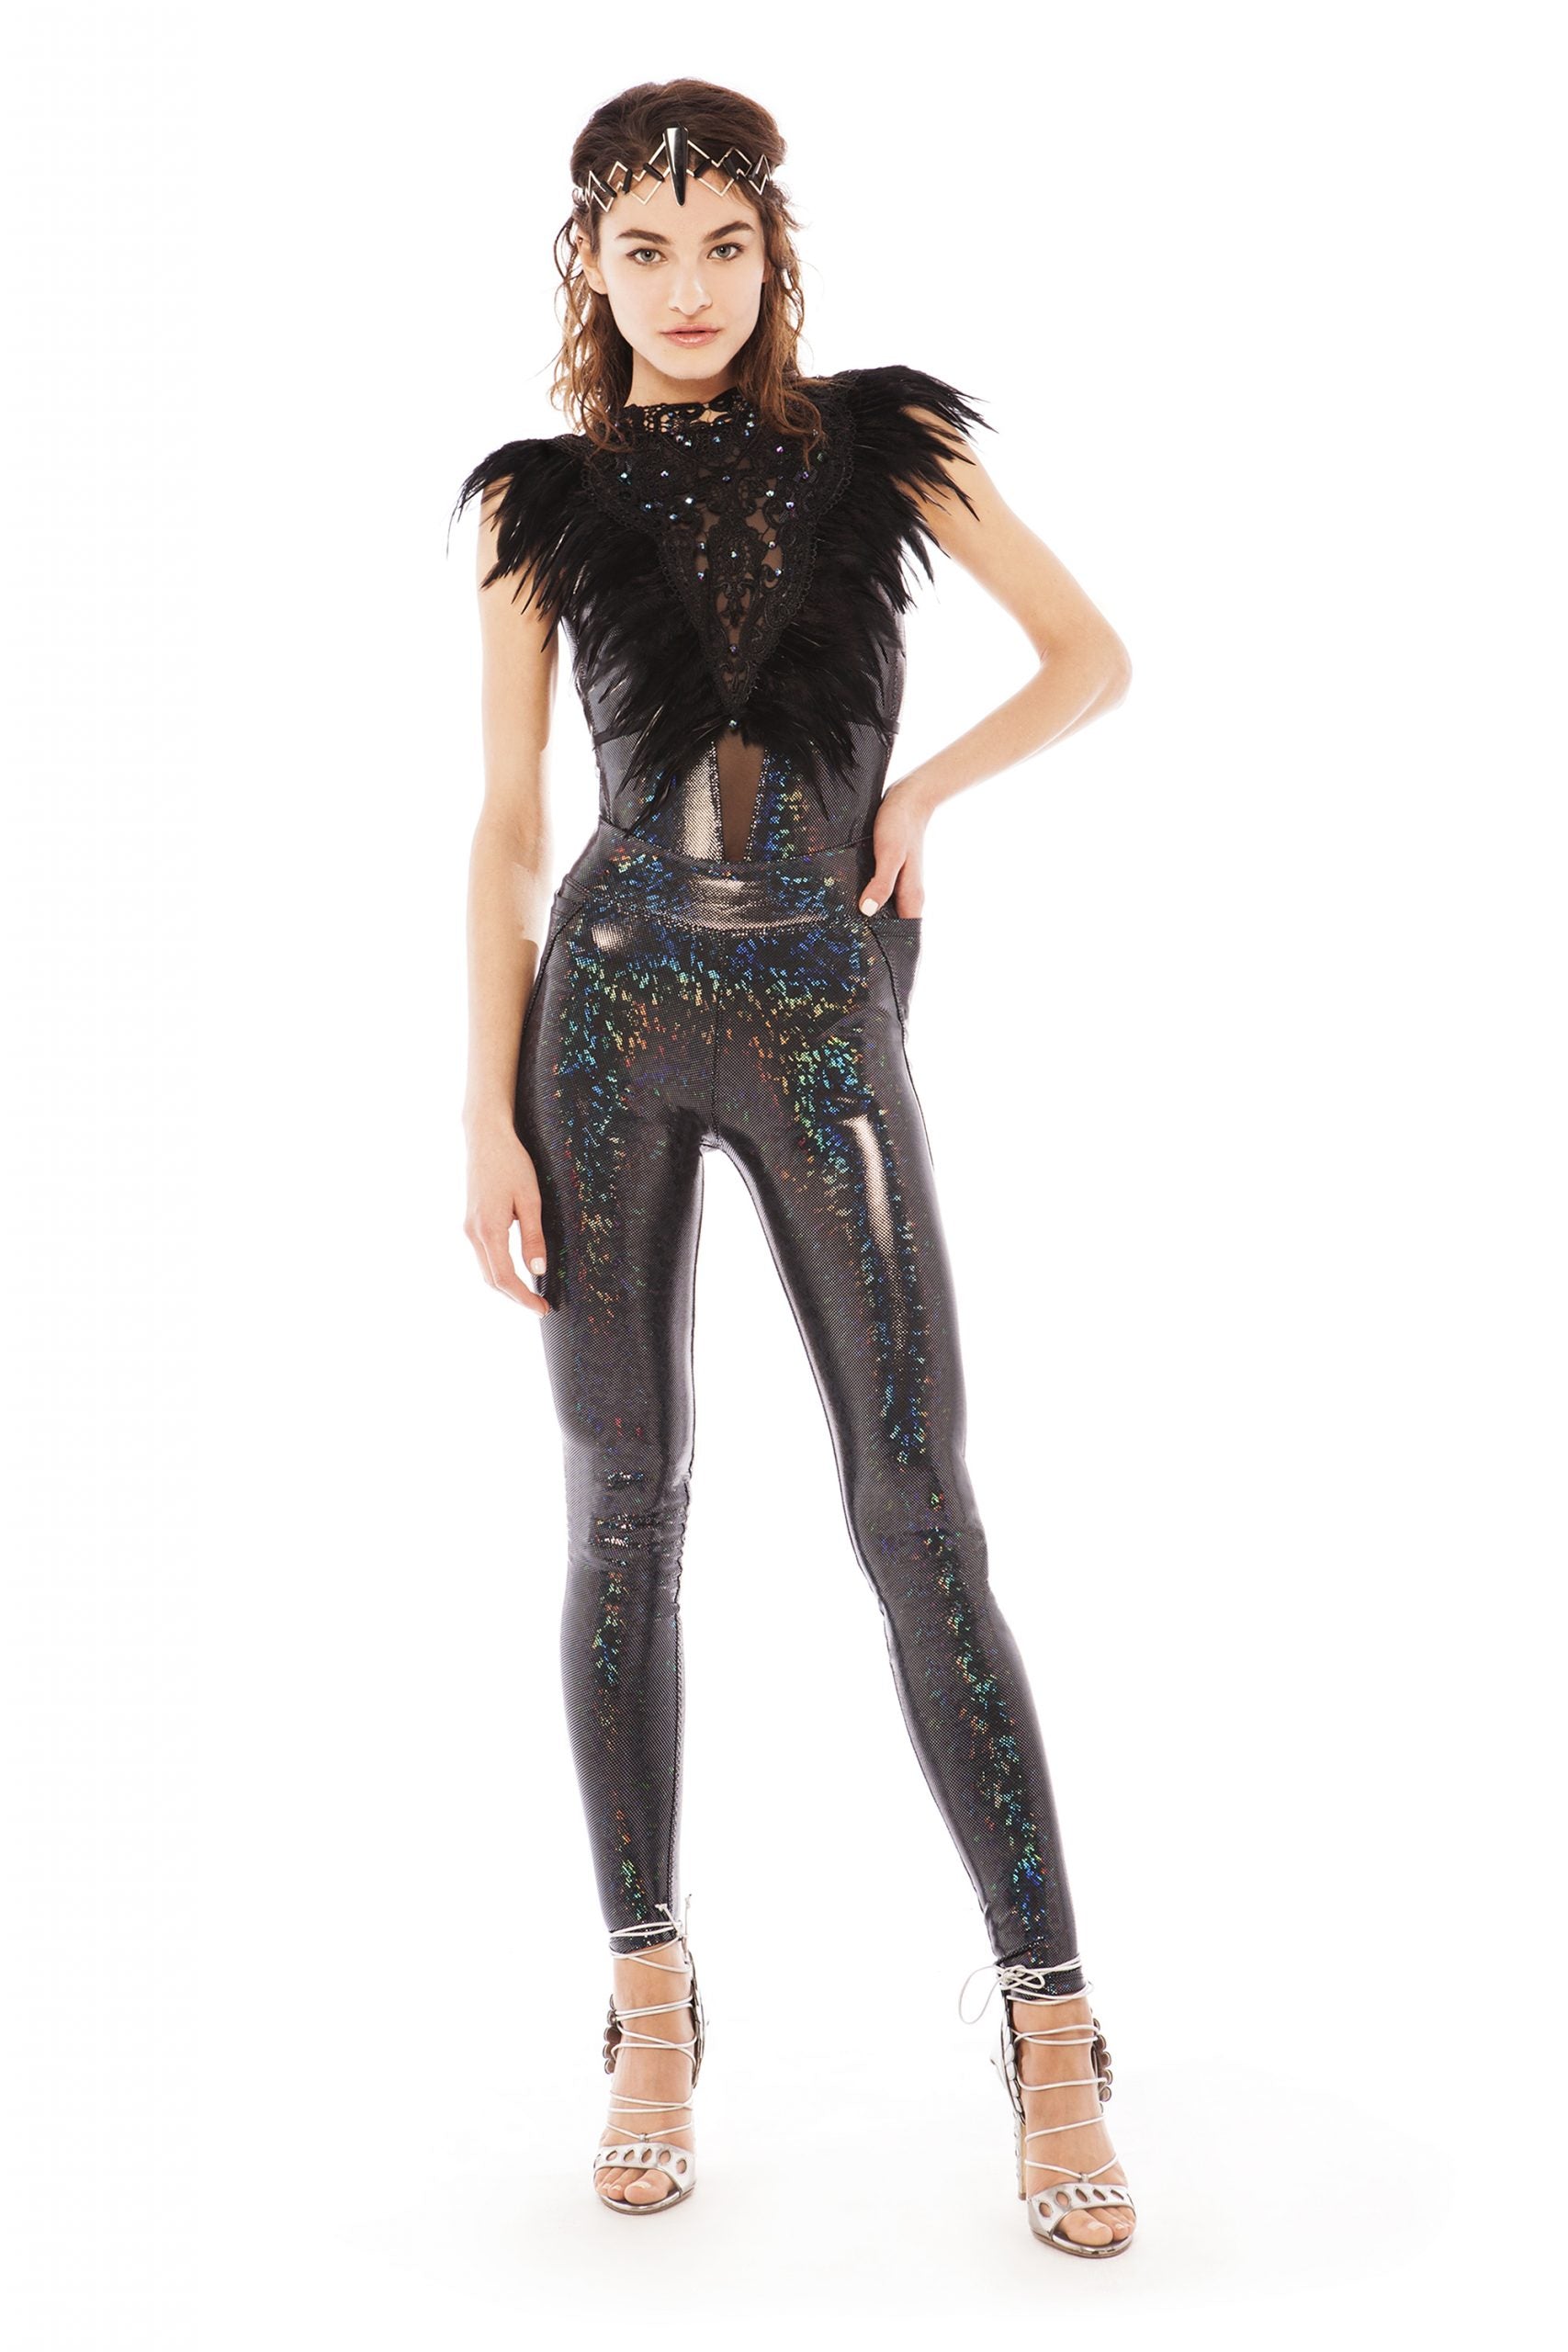 Holographic leggings – Leiluna Collection